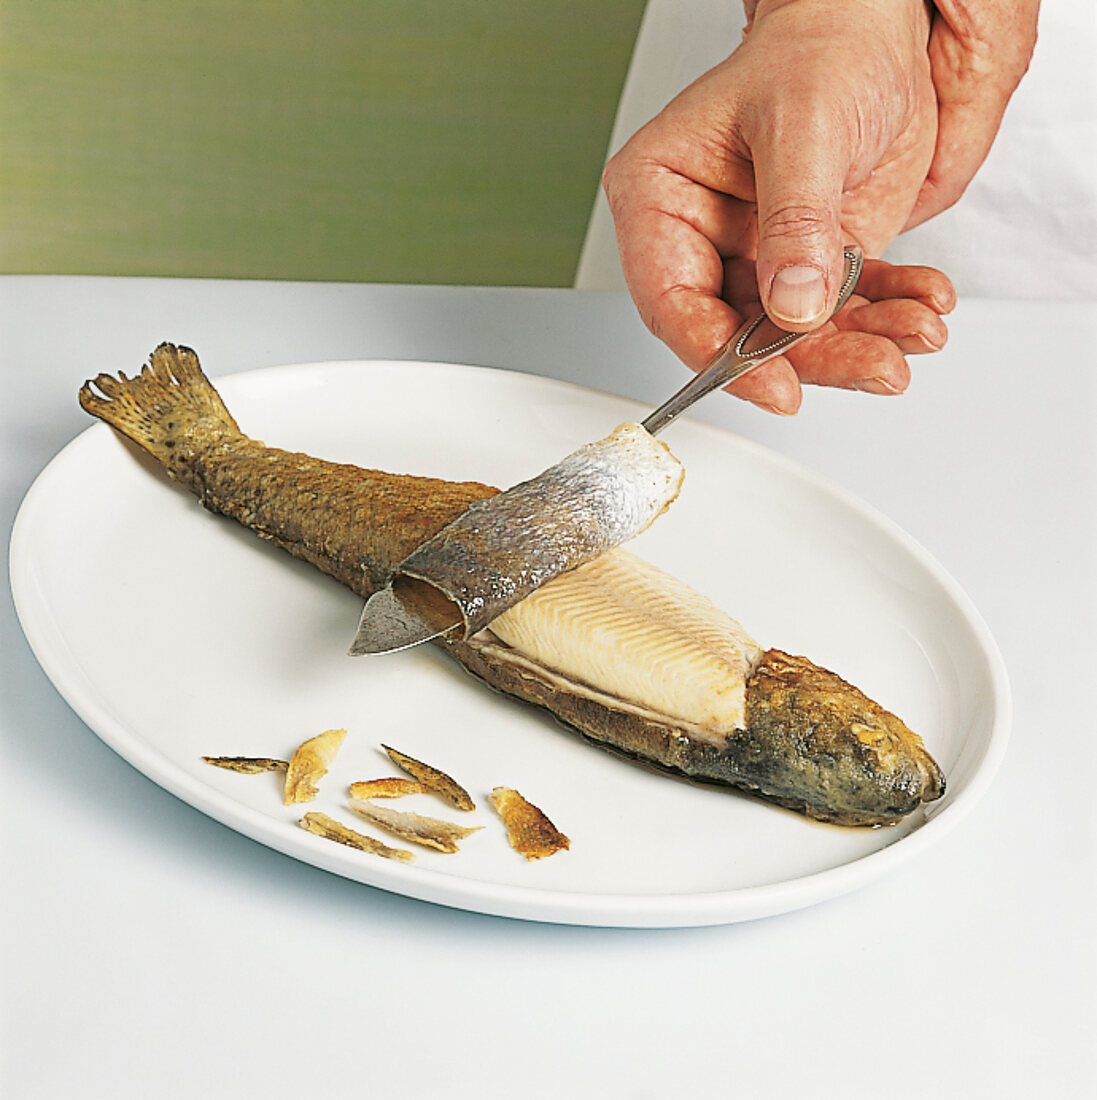 Fisch - Gegarten Fisch zerlegen, Step 1, Haut abziehen